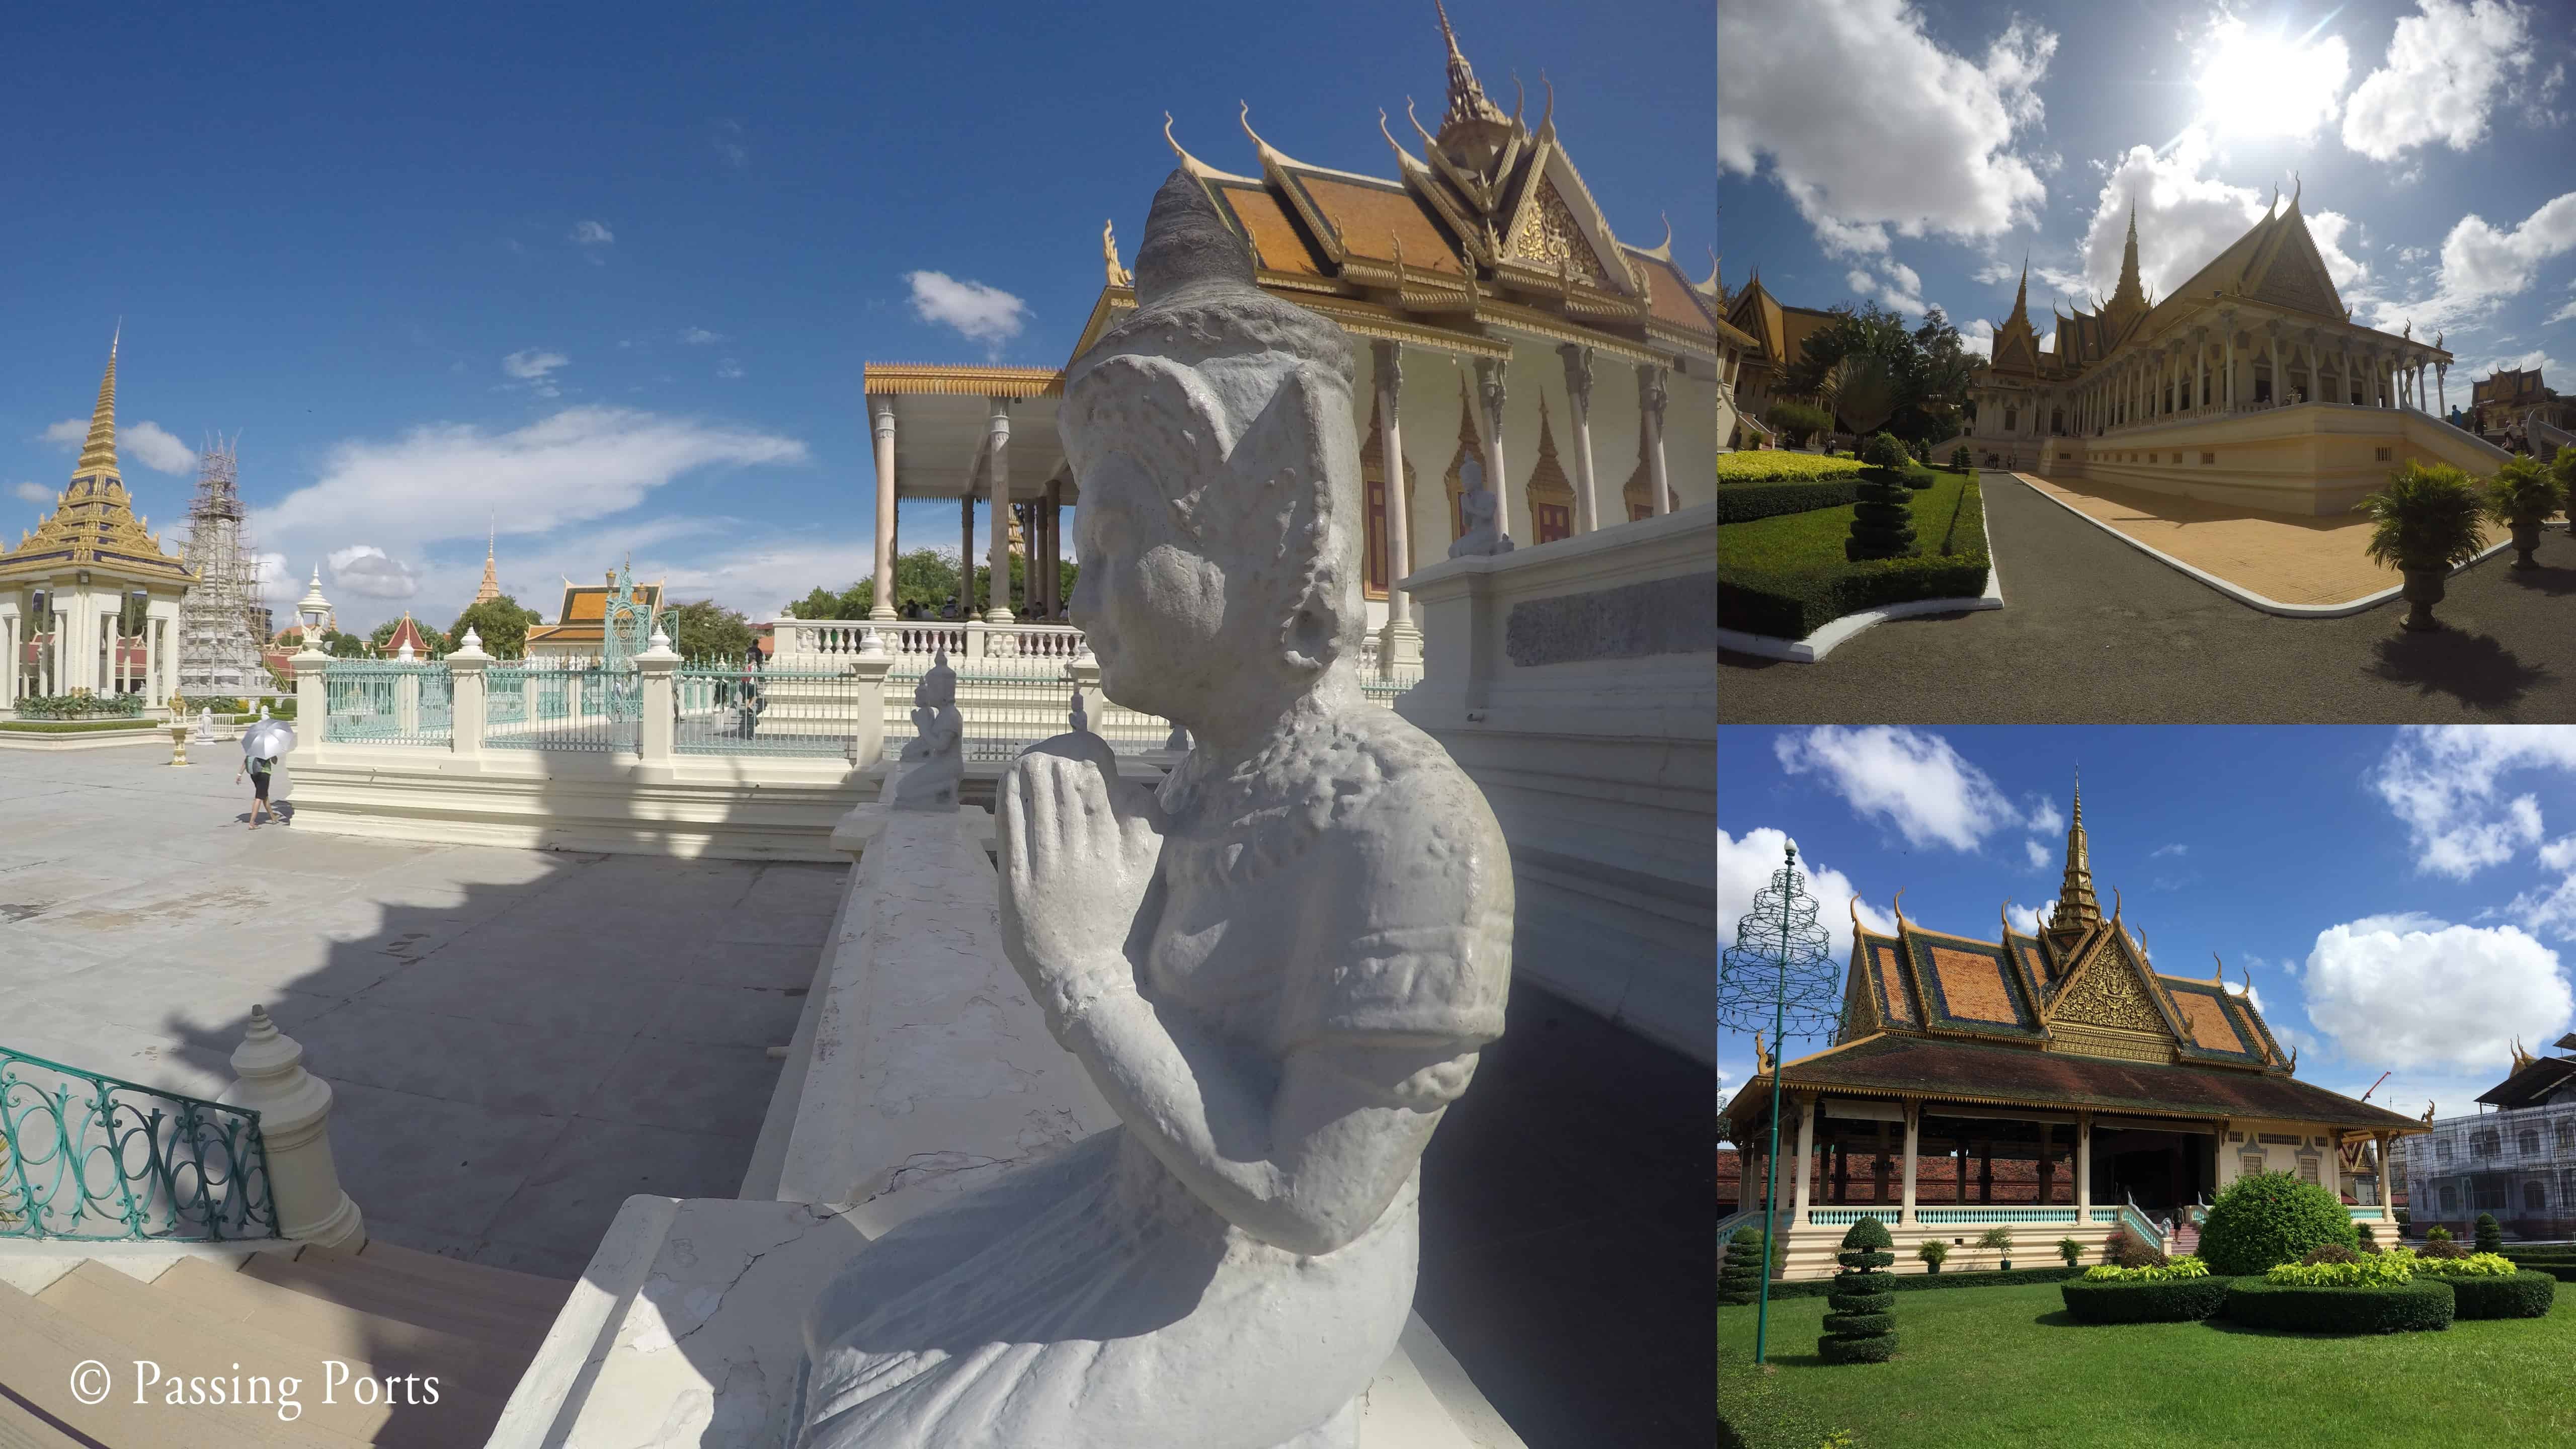 Royal Palace In Cambodia